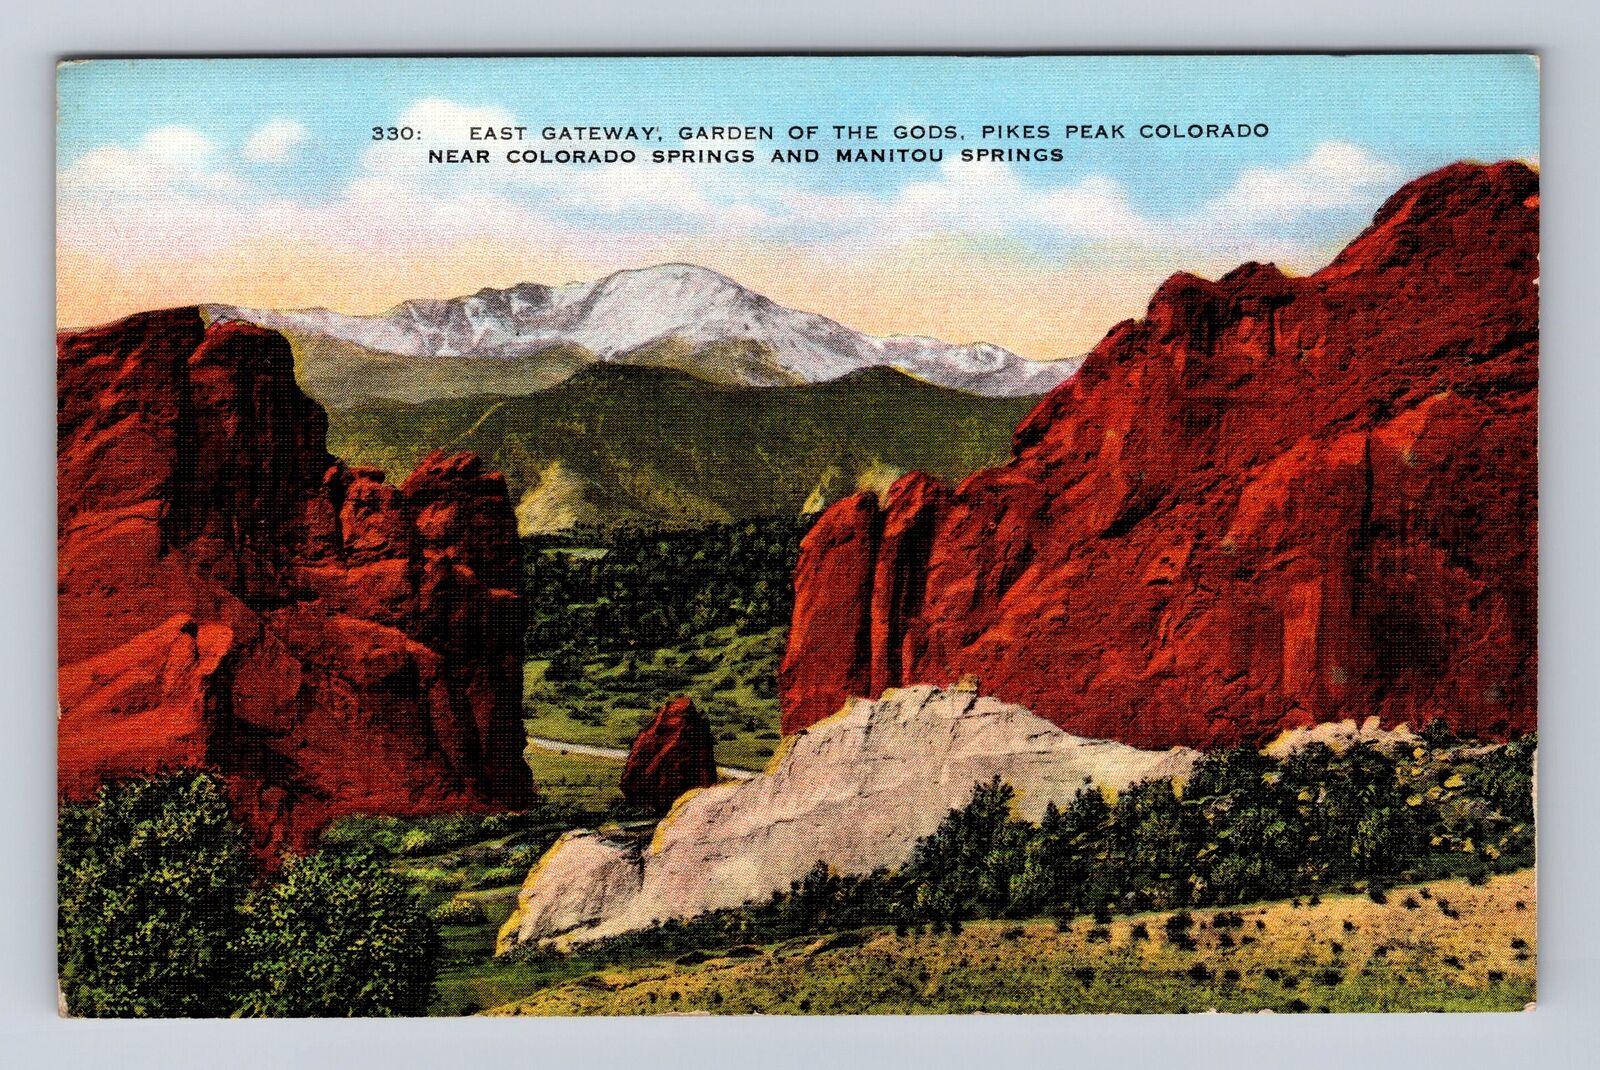 Pikes Peak CO- Colorado, East Gateway, Garden Of The Gods, Vintage Postcard